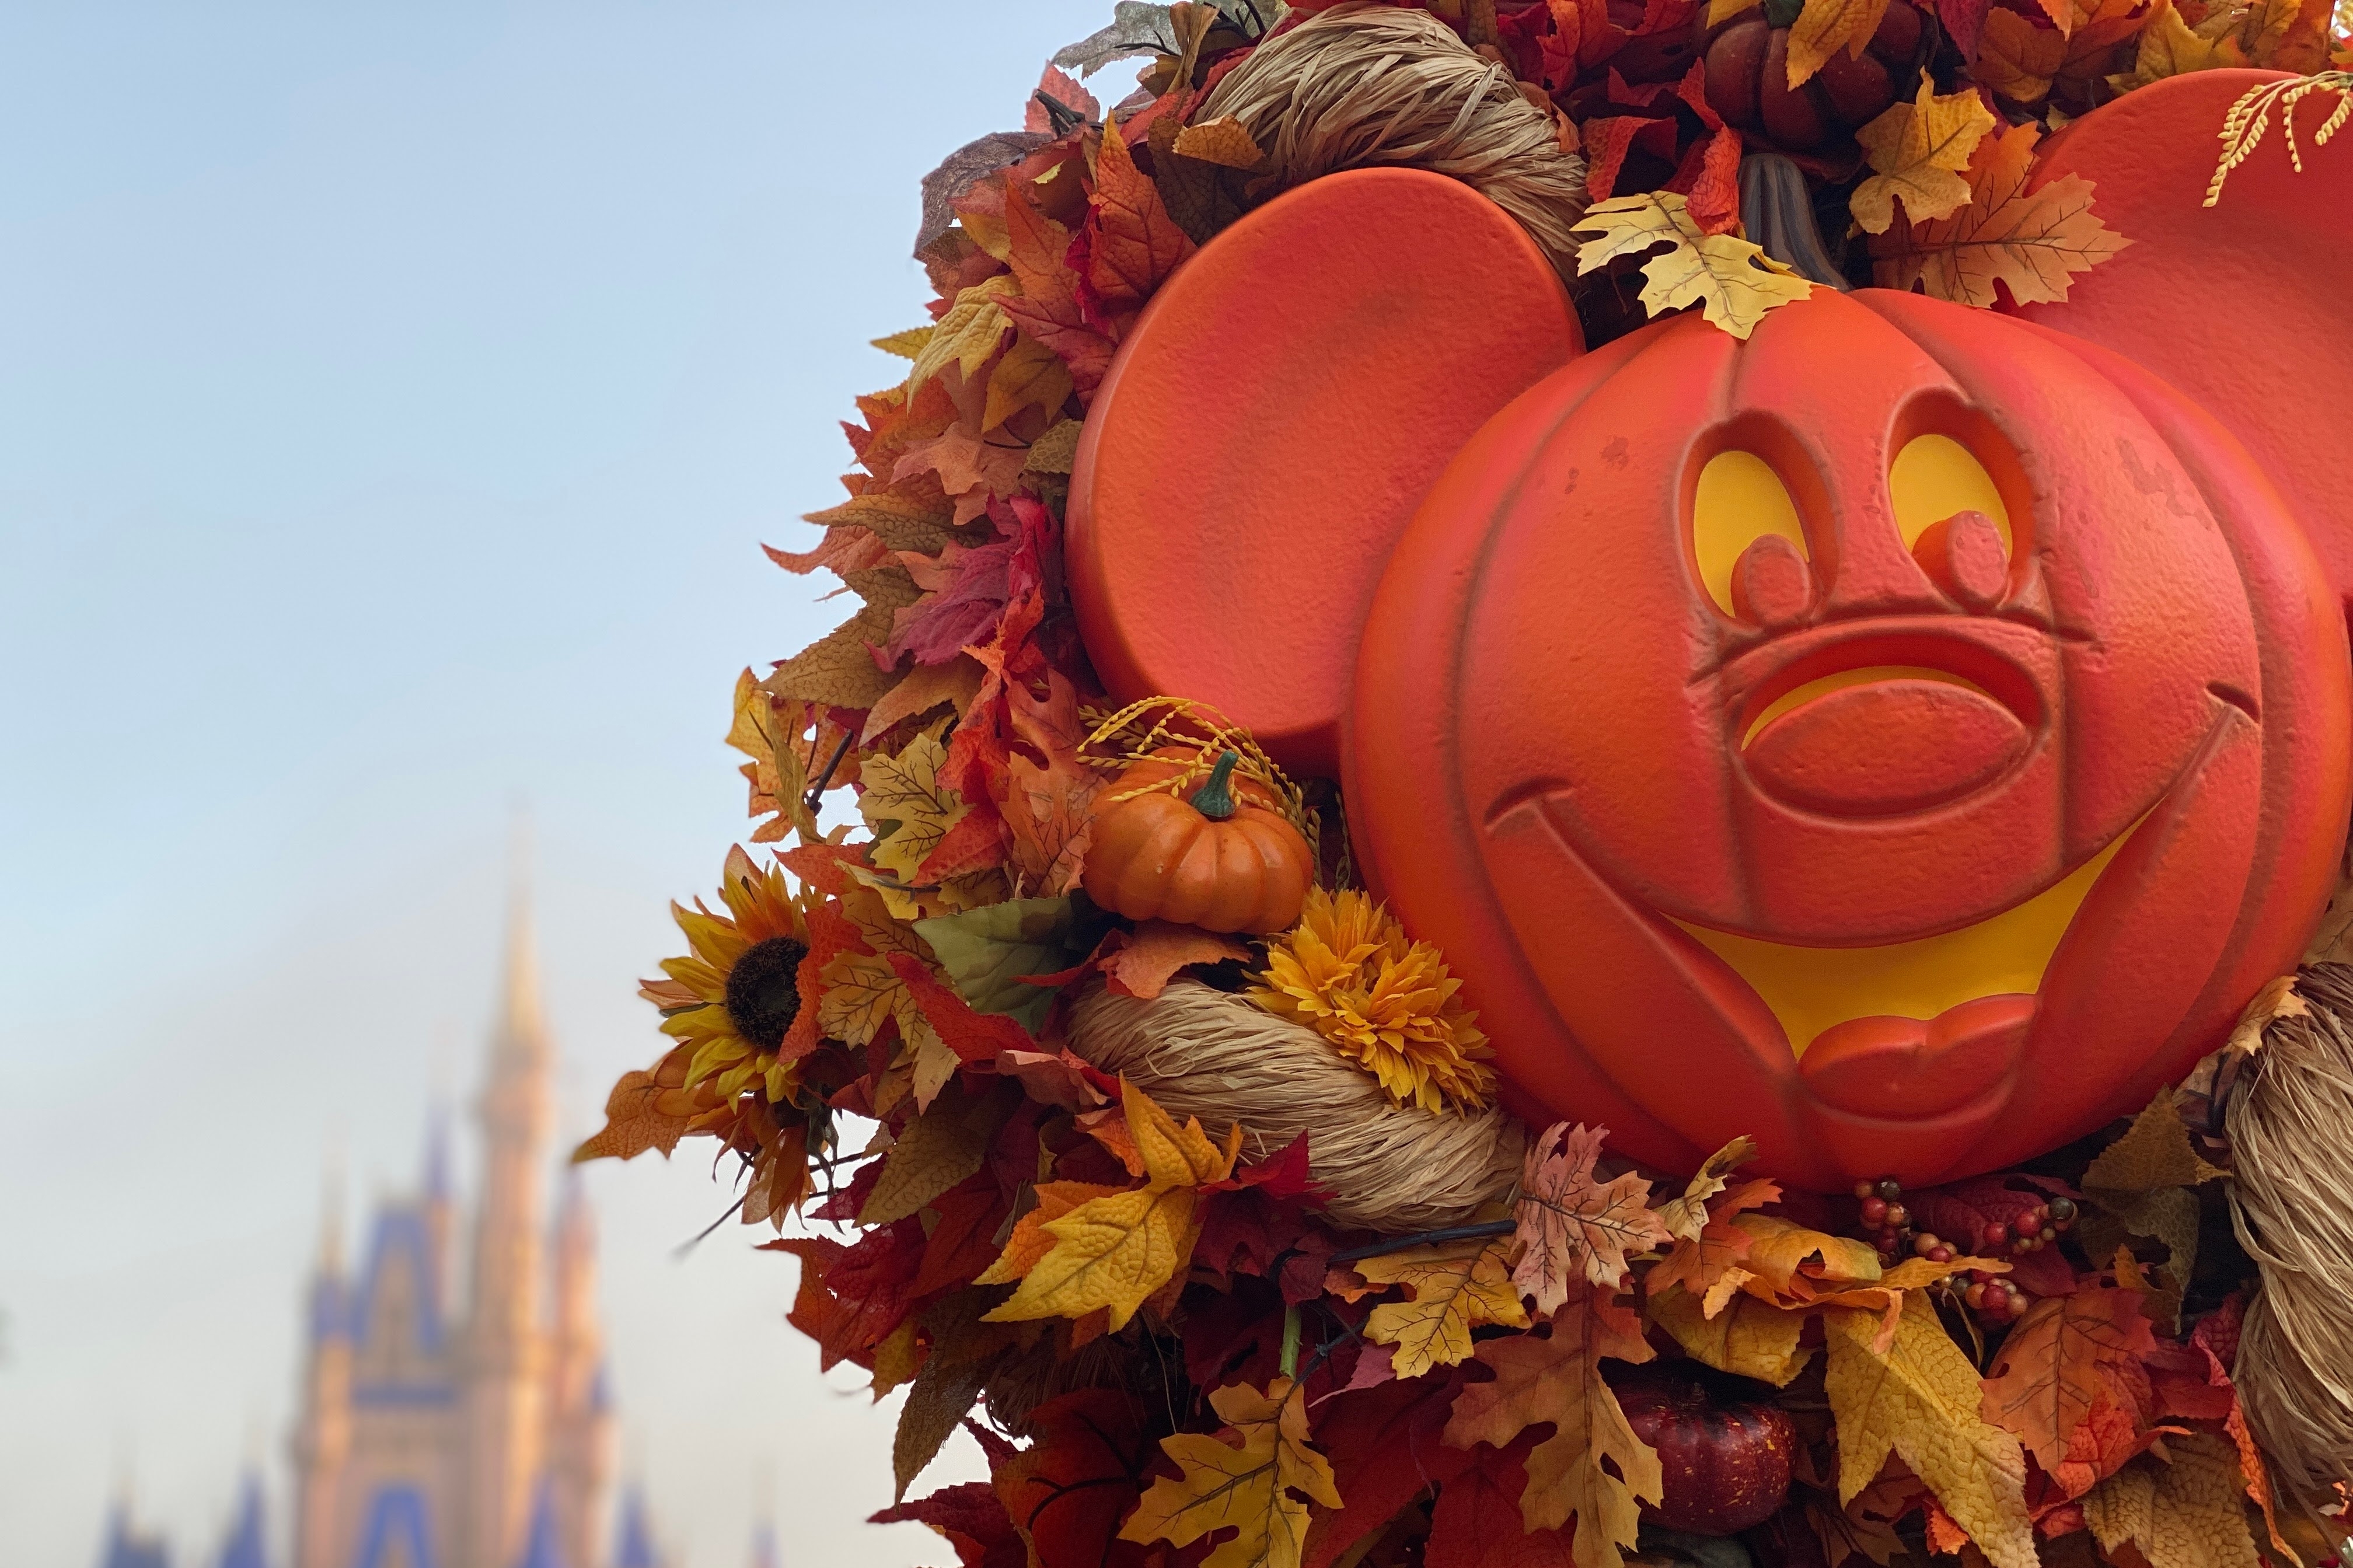 HD wallpaper, Disney World, Fall, Mickey Mouse, Thanksgiving, Autumn Leaves, Pumpkin